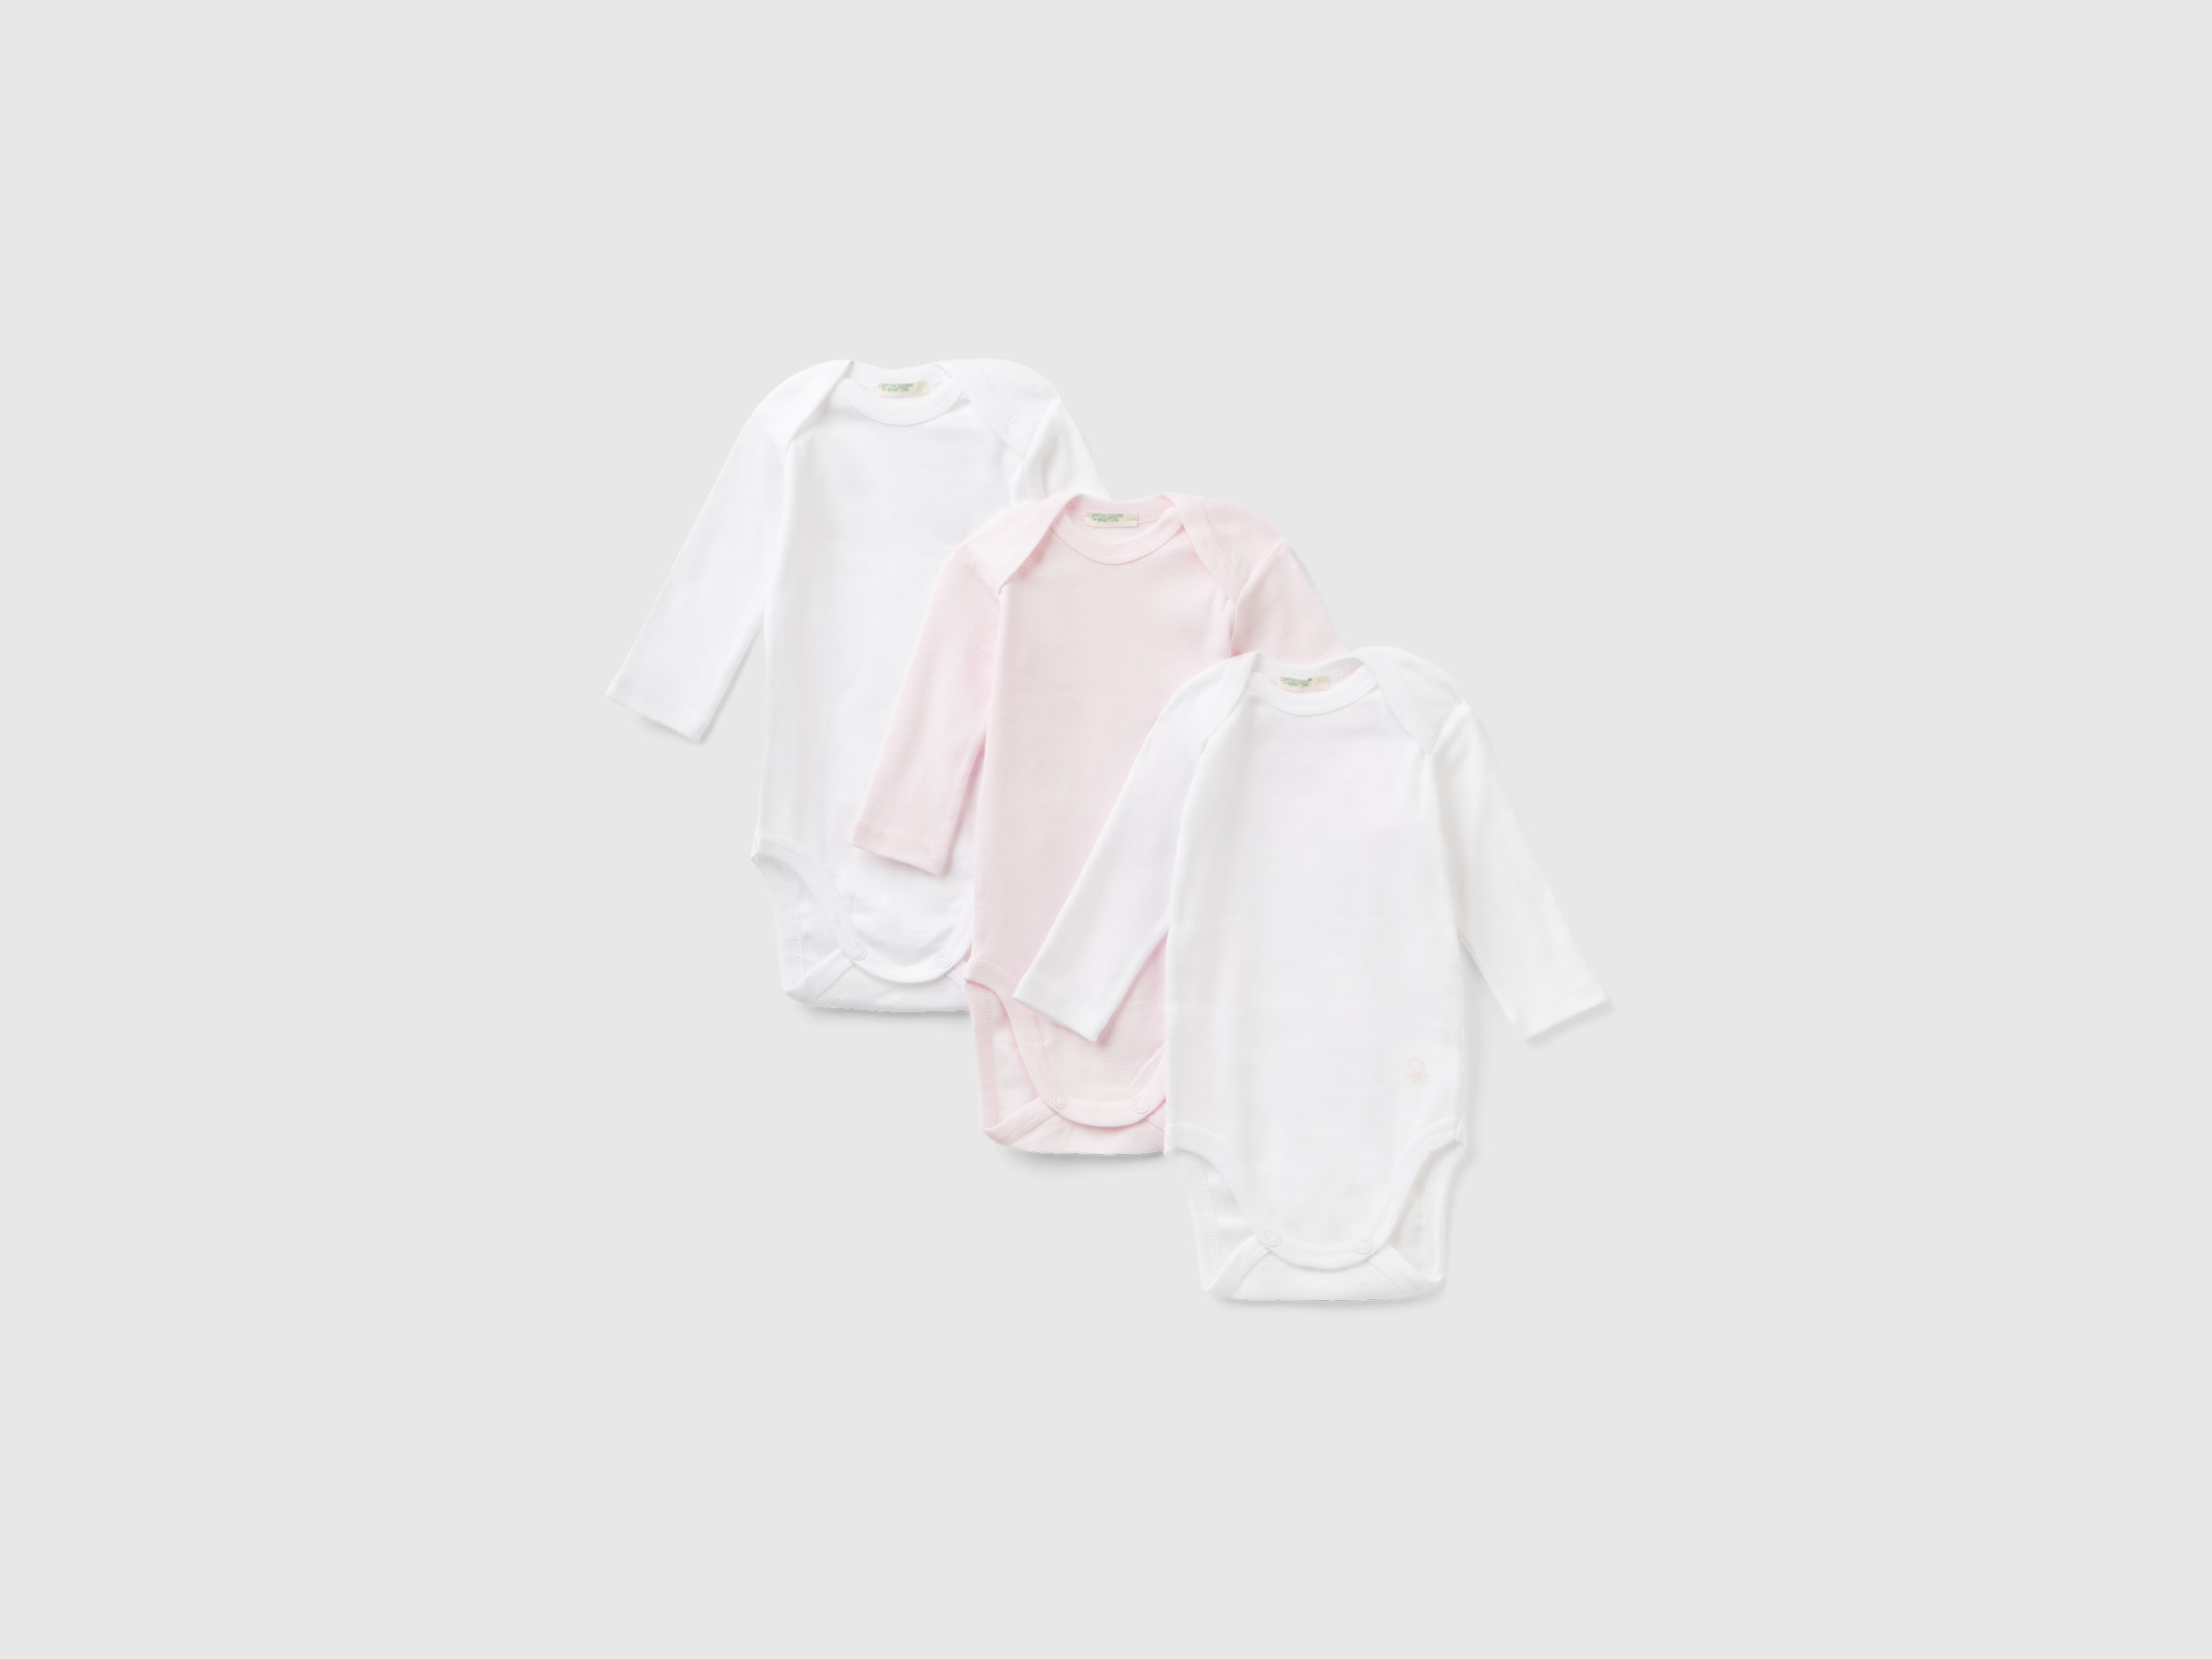 Benetton, Three Solid Color Bodysuits In Organic Cotton, size 1-3, Multi-color, Kids